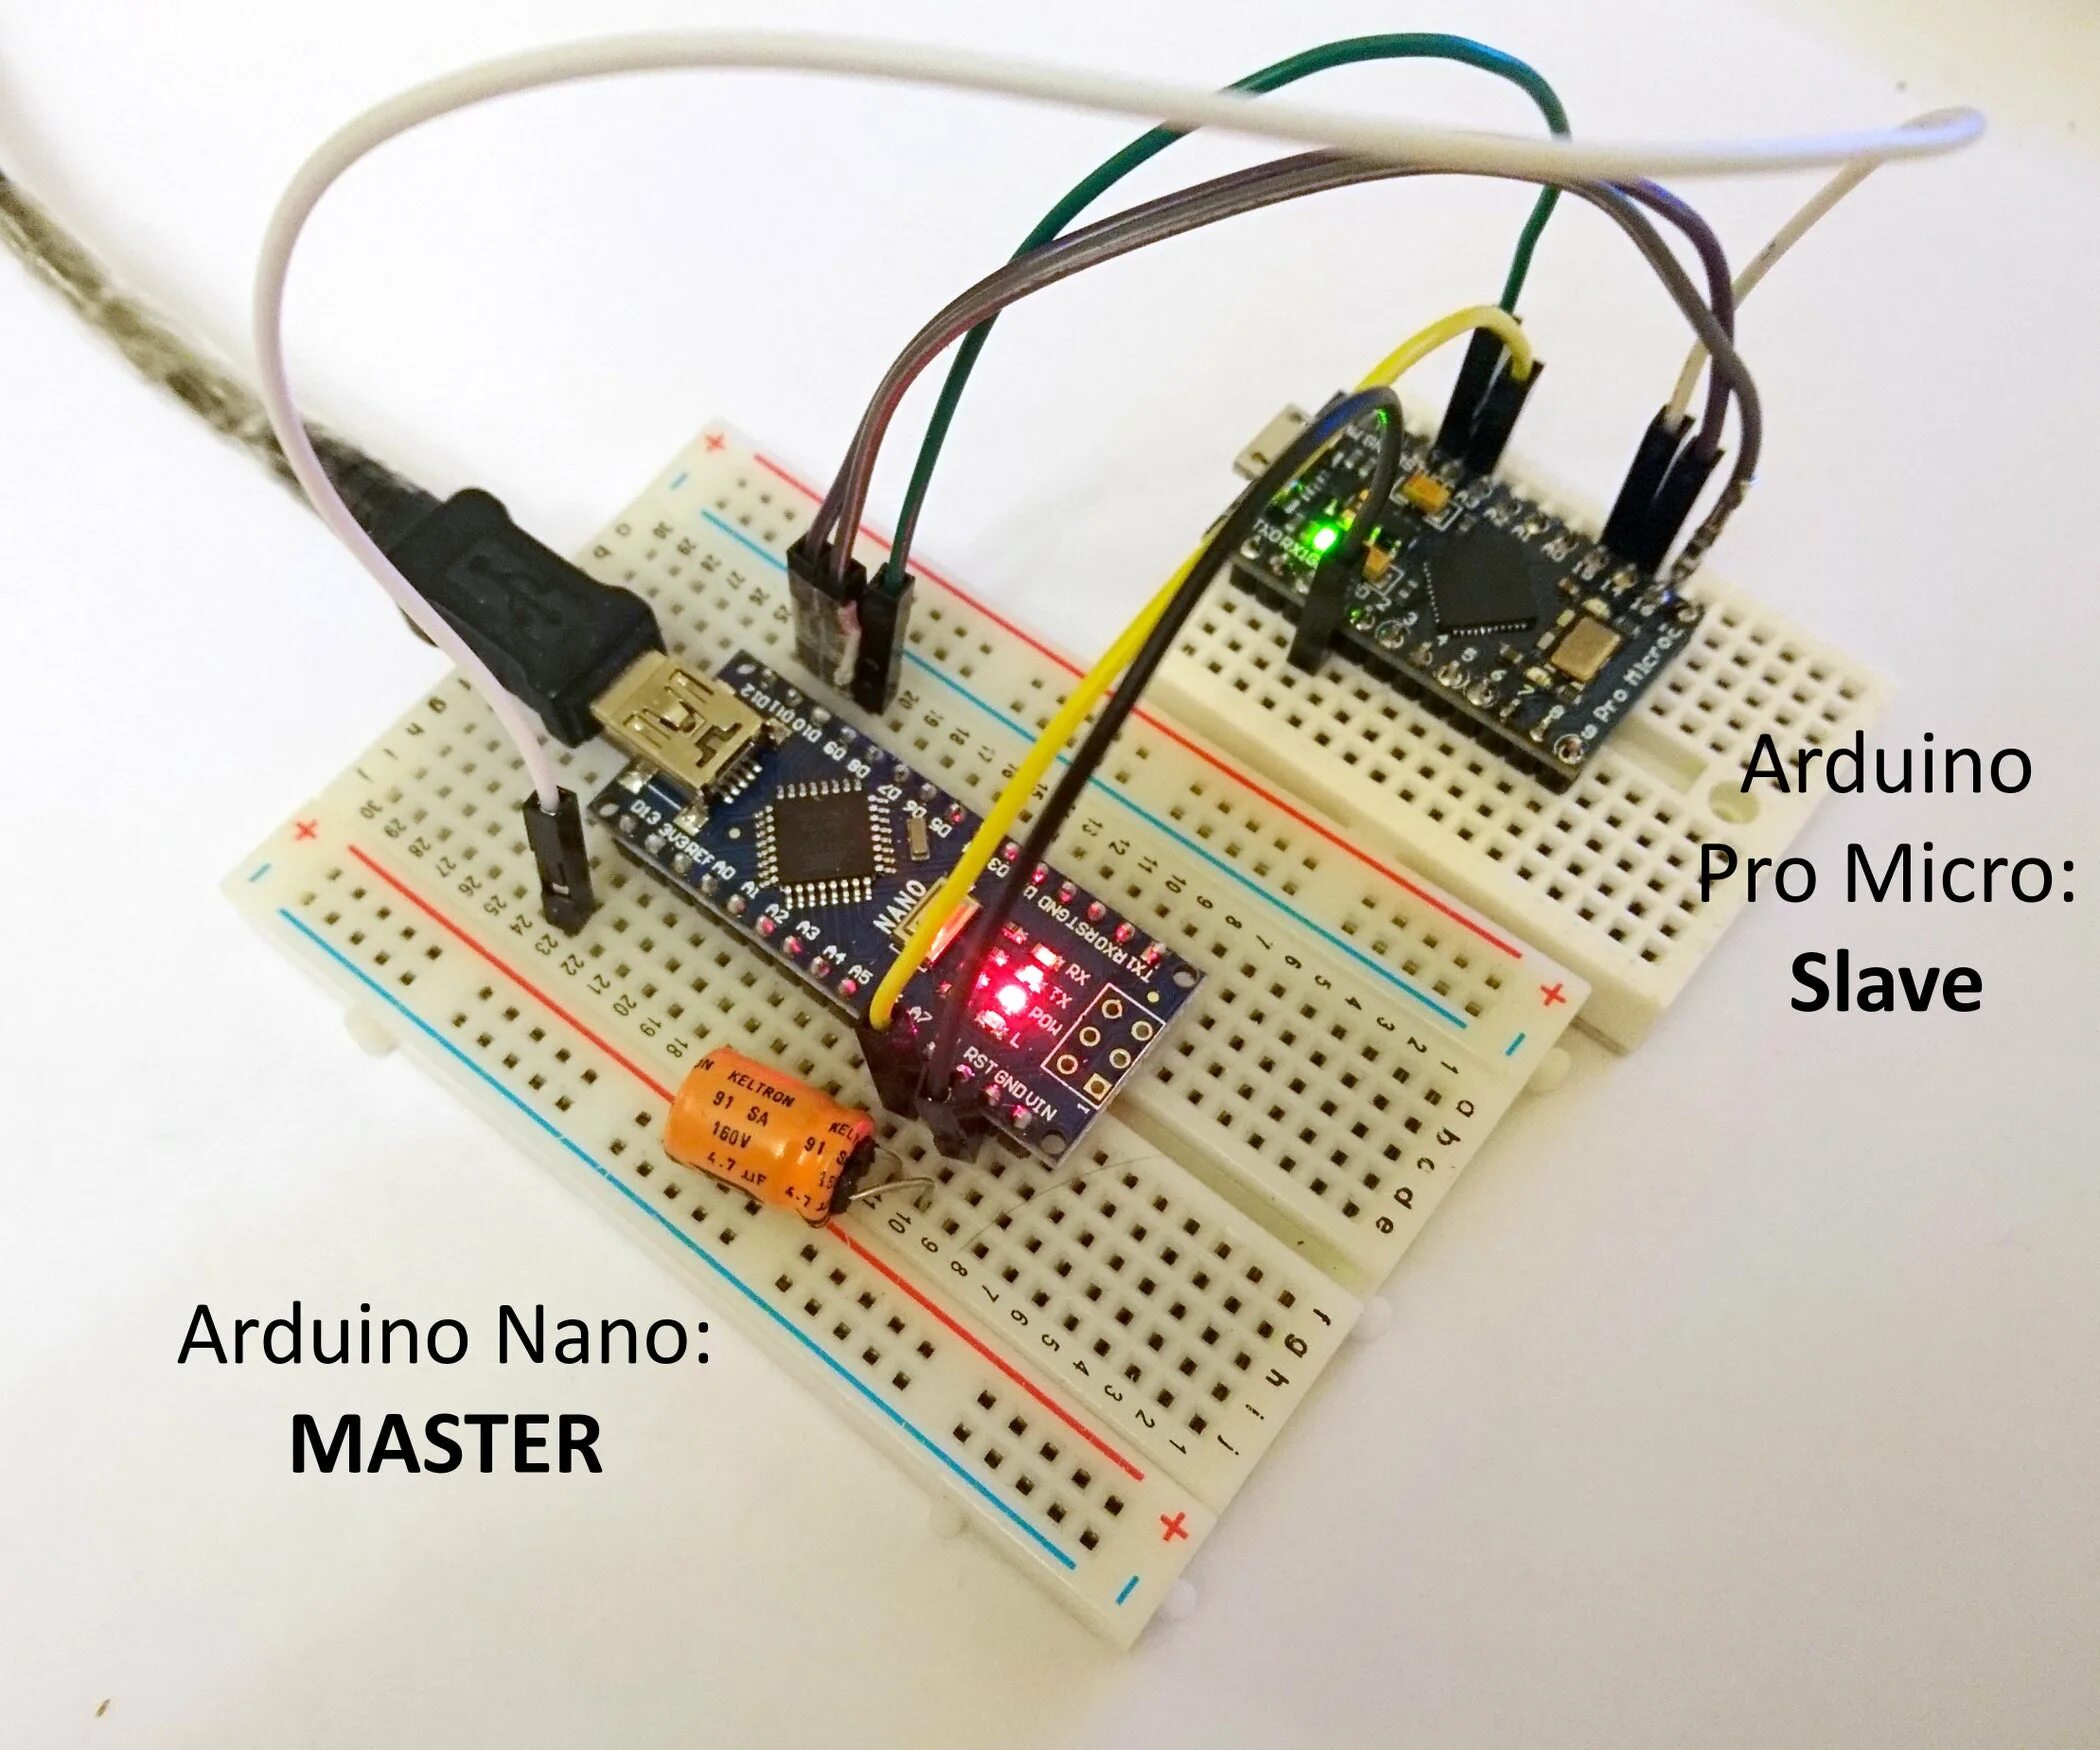 Прошивка микро. Программатор для ардуино нано. Arduino Micro ISP программатор. Ардуино нано программатор ISP. Arduino Nano as ISP.